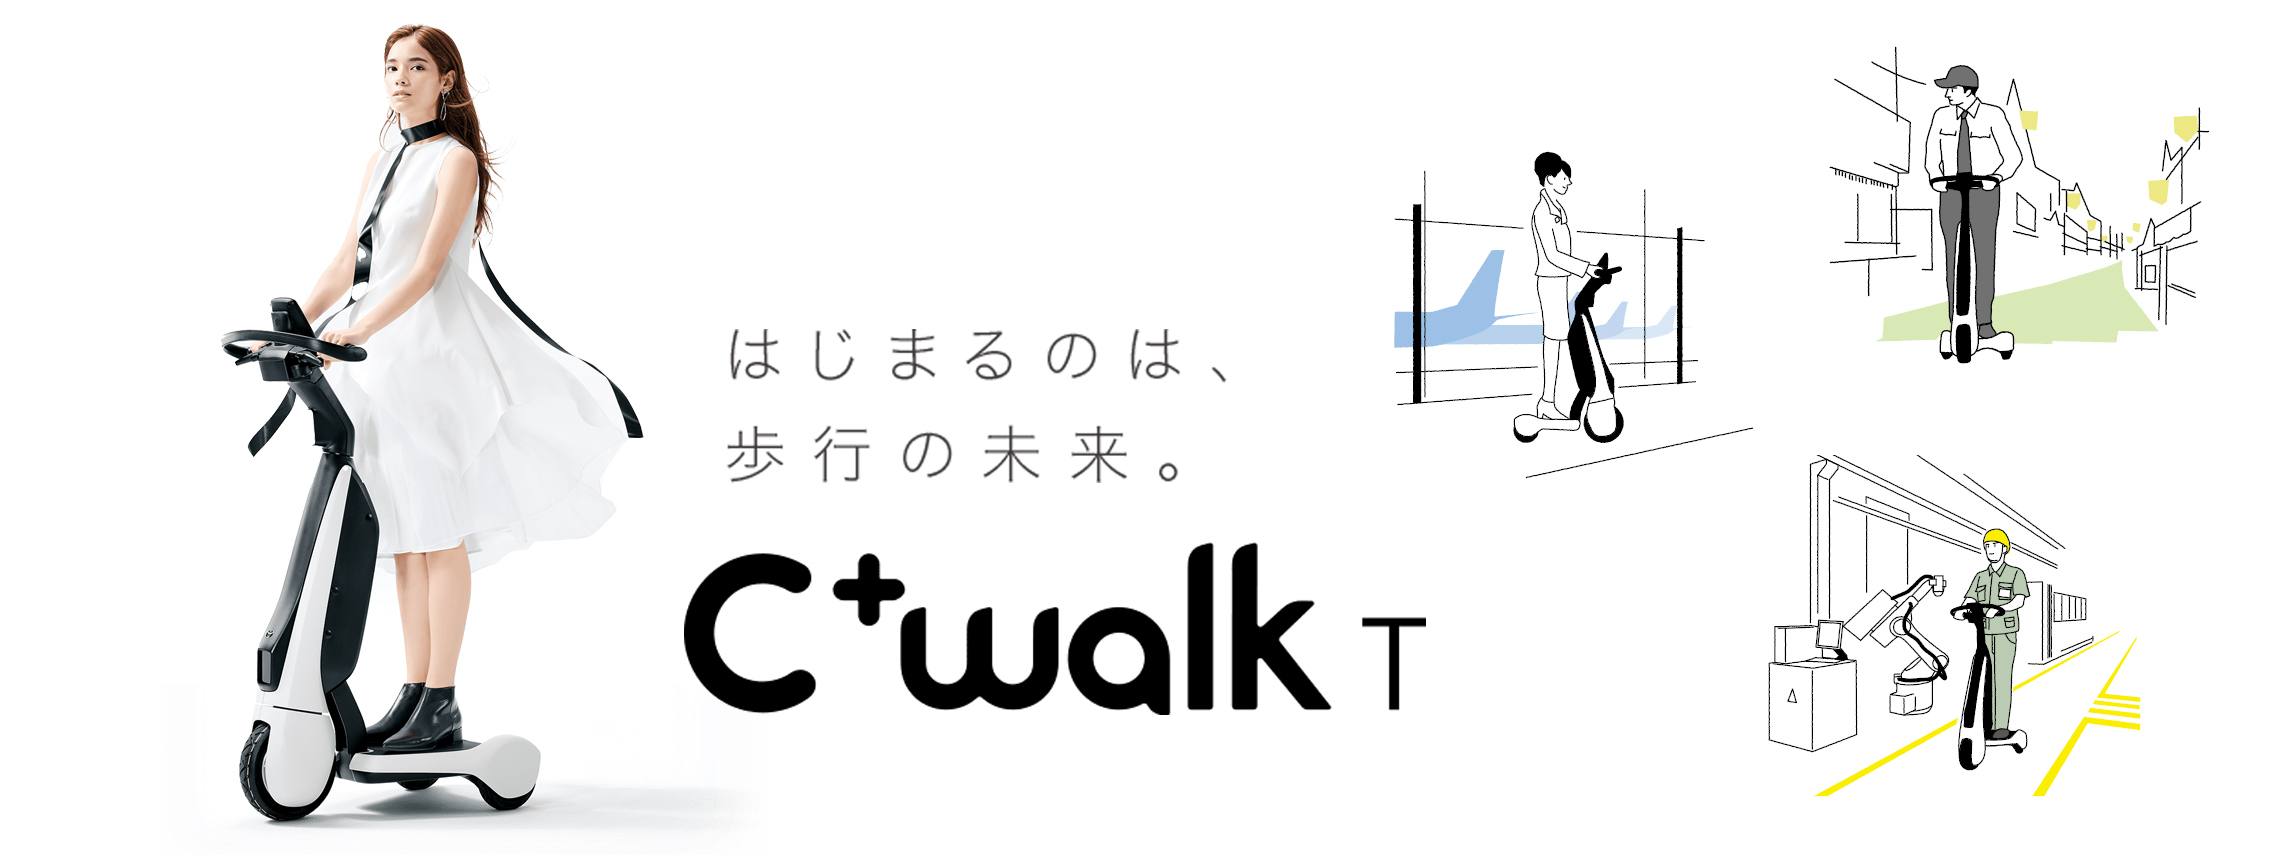 Cwalk_MV